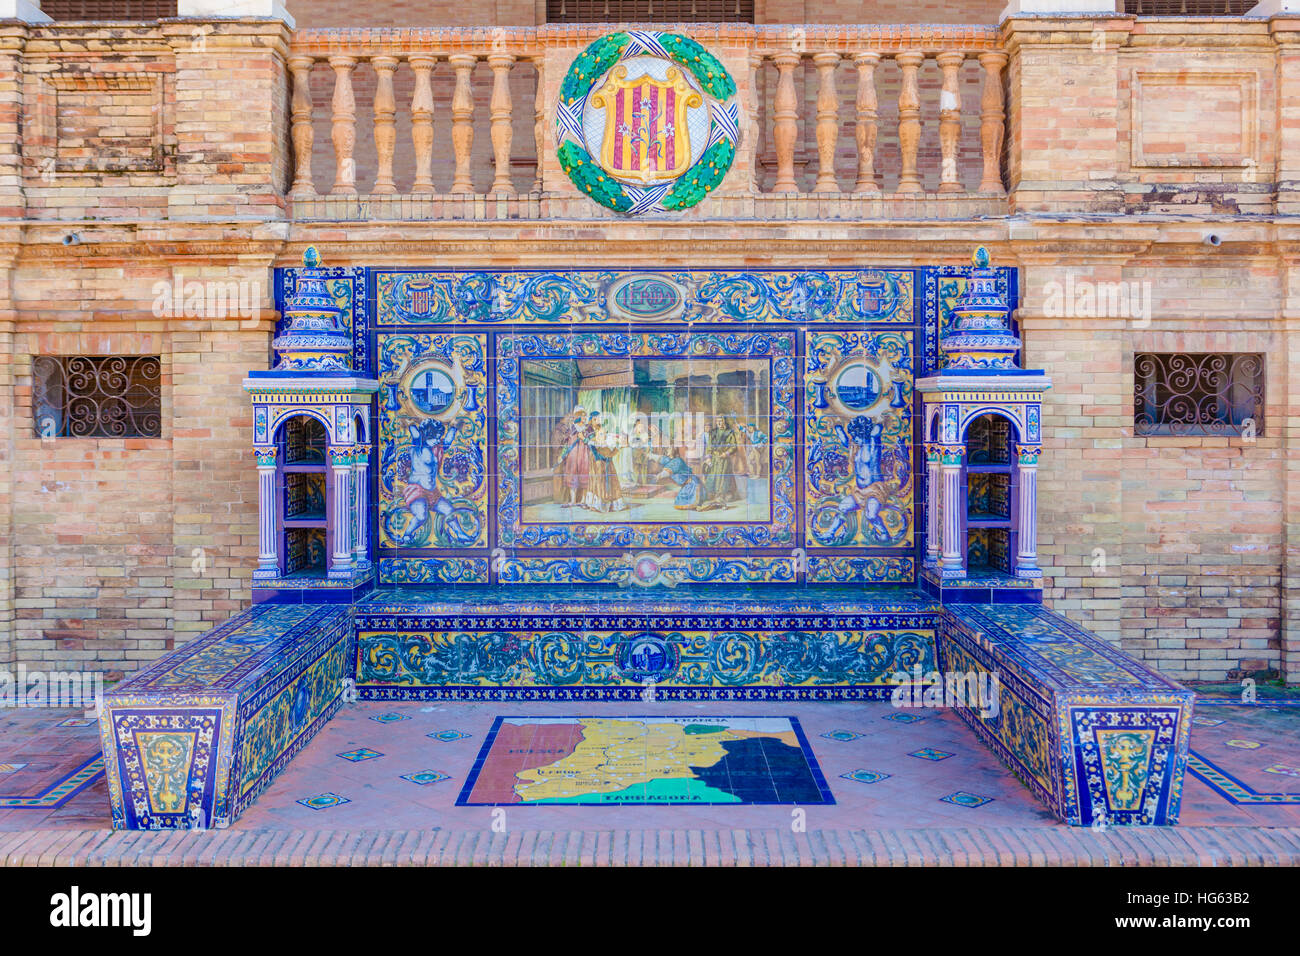 Glazed tiles bench of spanish province of Lerida at Plaza de Espana, Seville, Spain Stock Photo